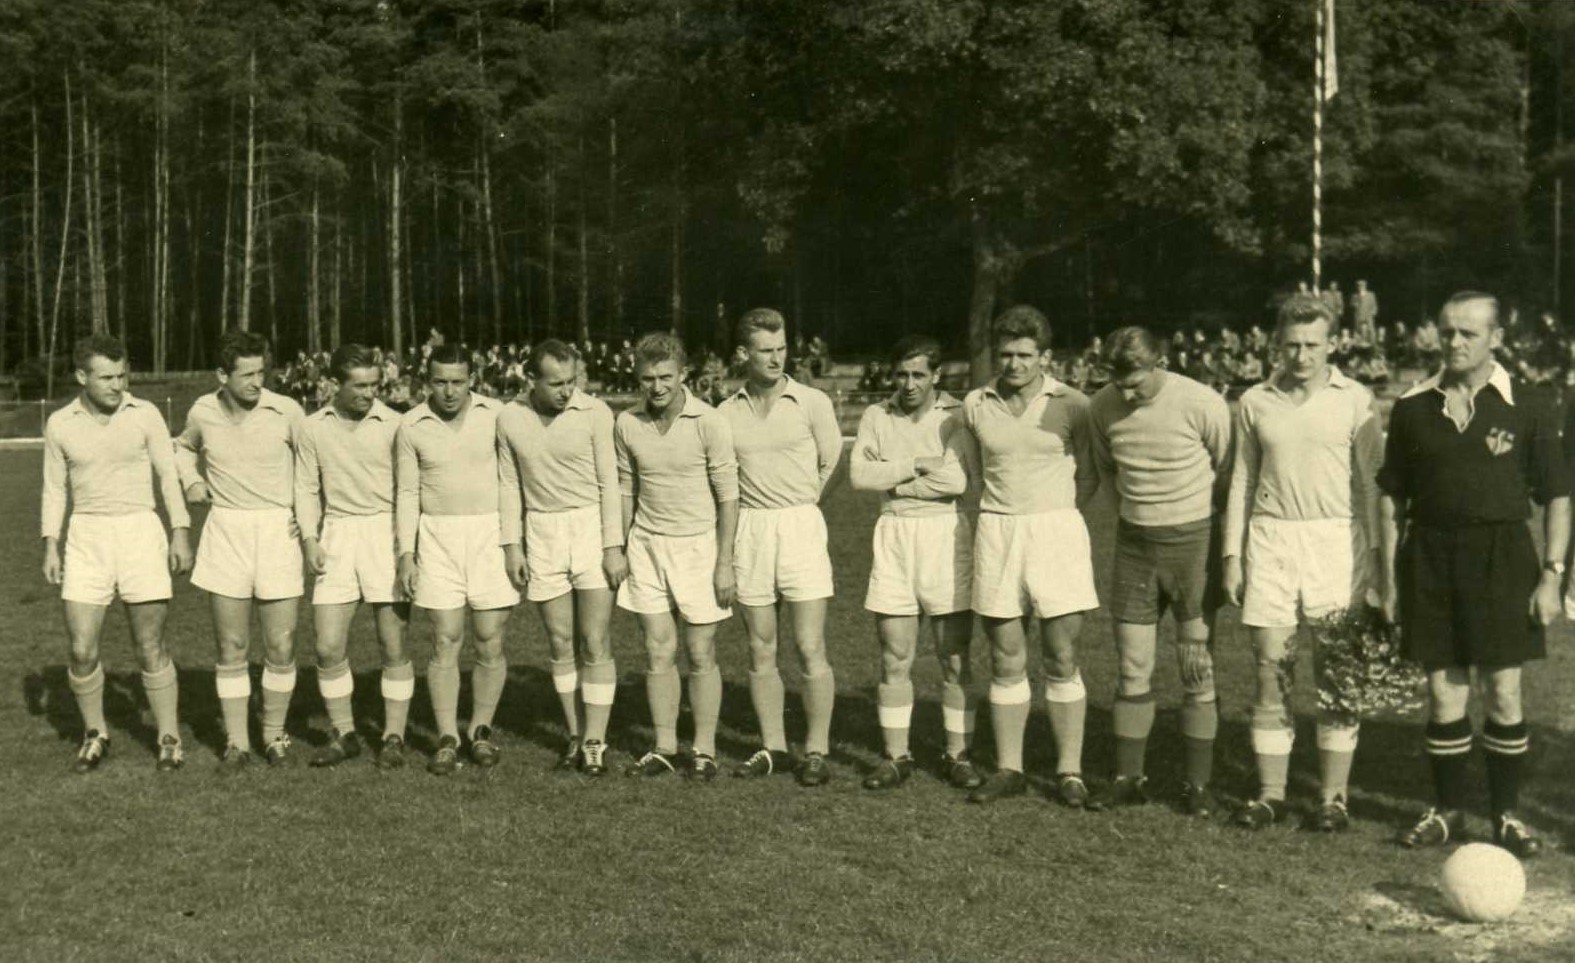 Ruch Chorzow 1958